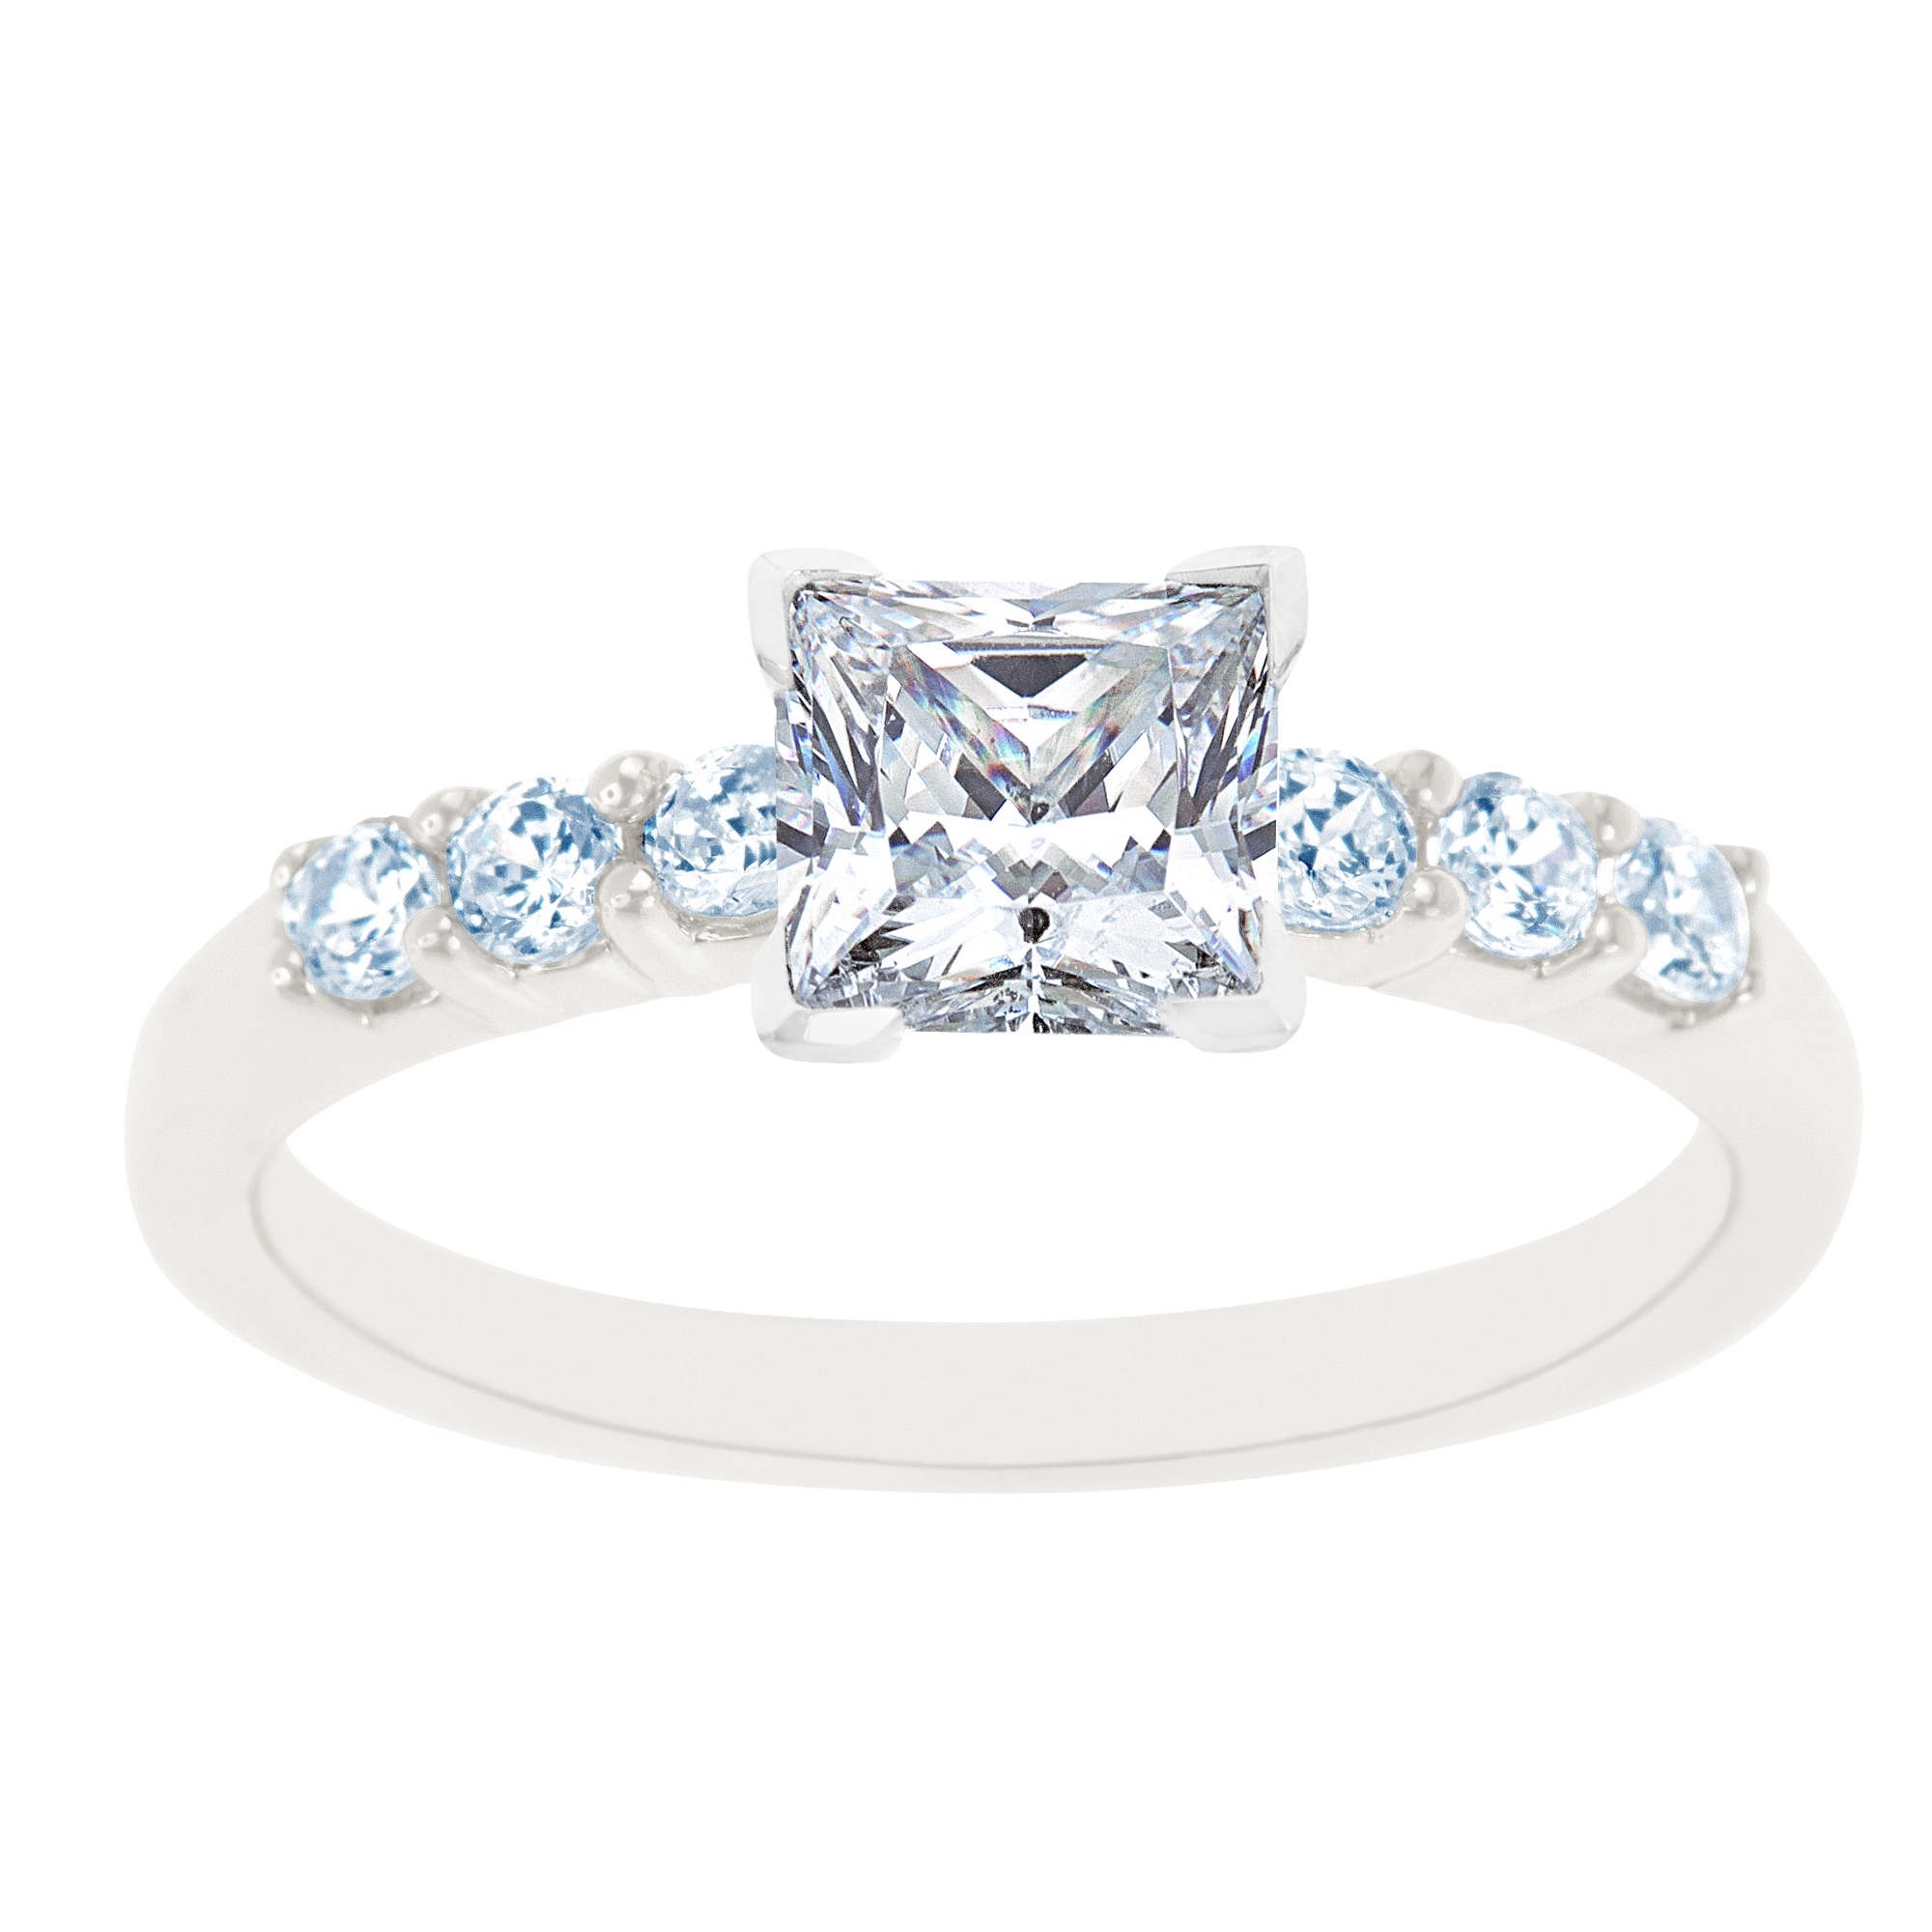 New York City Diamond District 14K White Gold Seven Stone Princess Cut Certified Diamond Engagement Ring